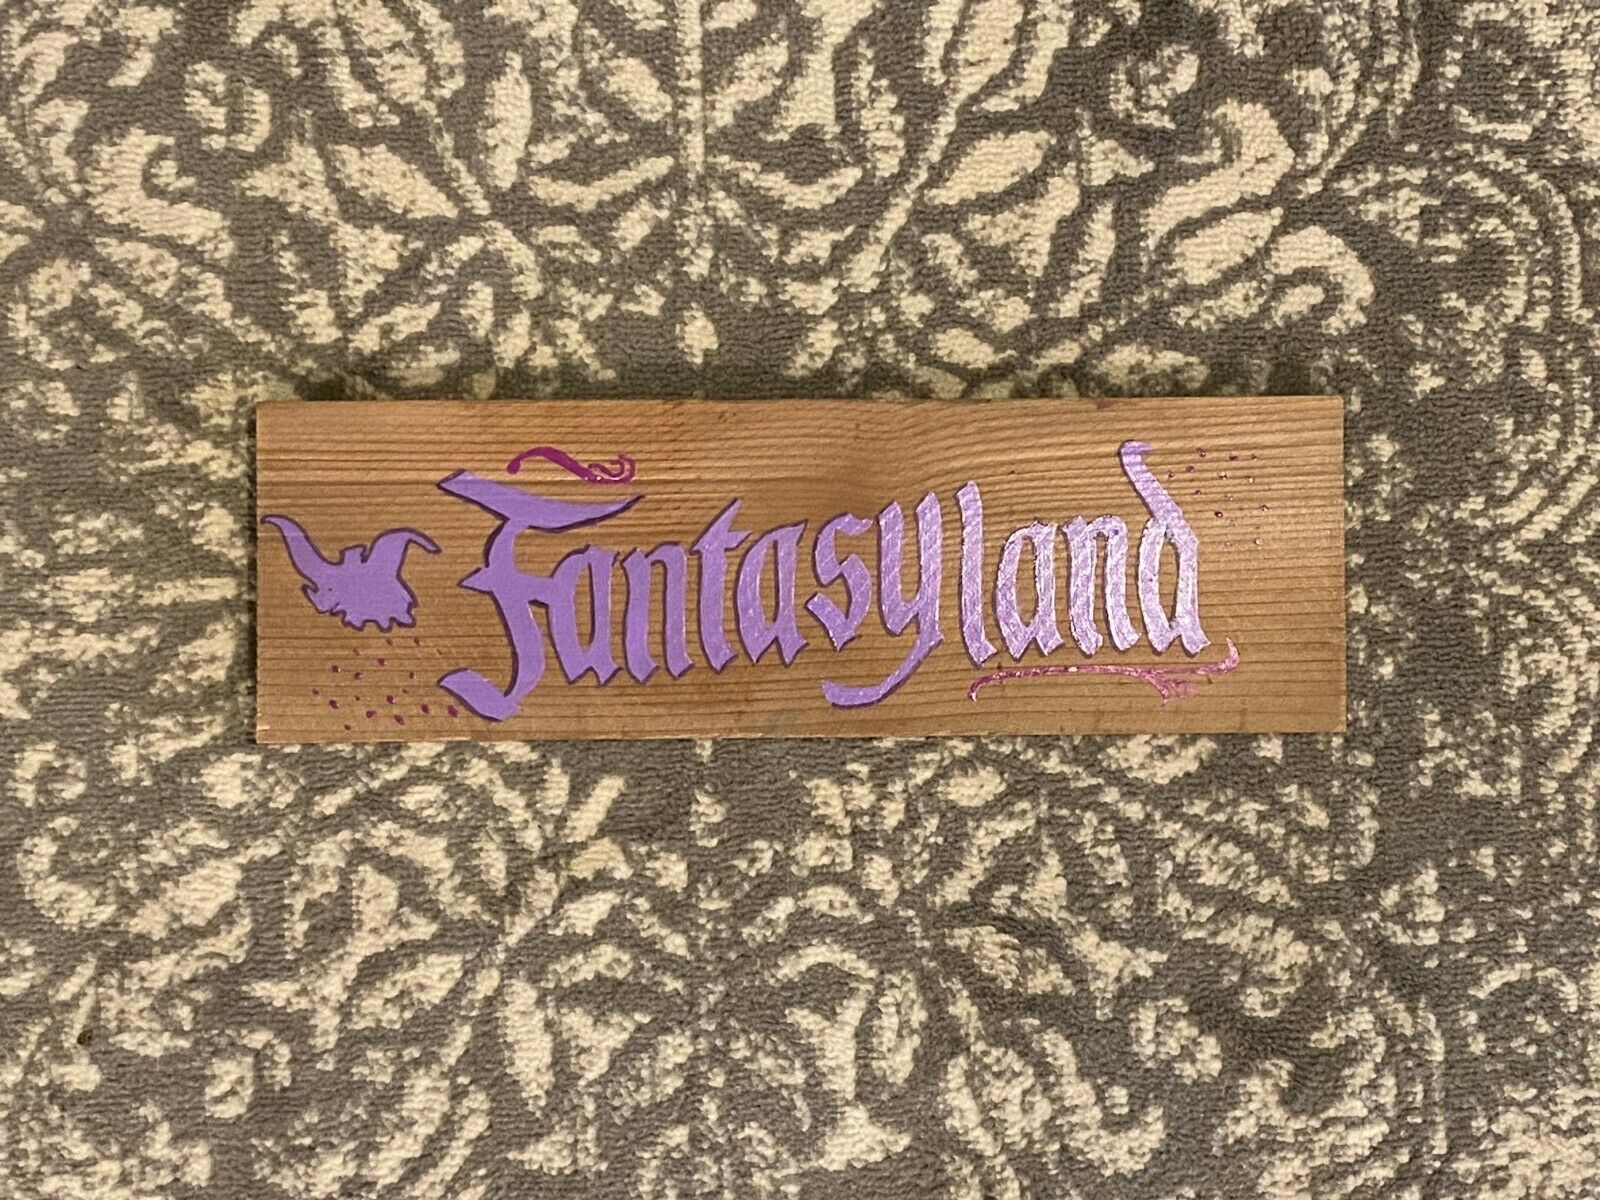 Fantasyland Disneyland Sign, Snow White, Disney Home, Attraction Recreation